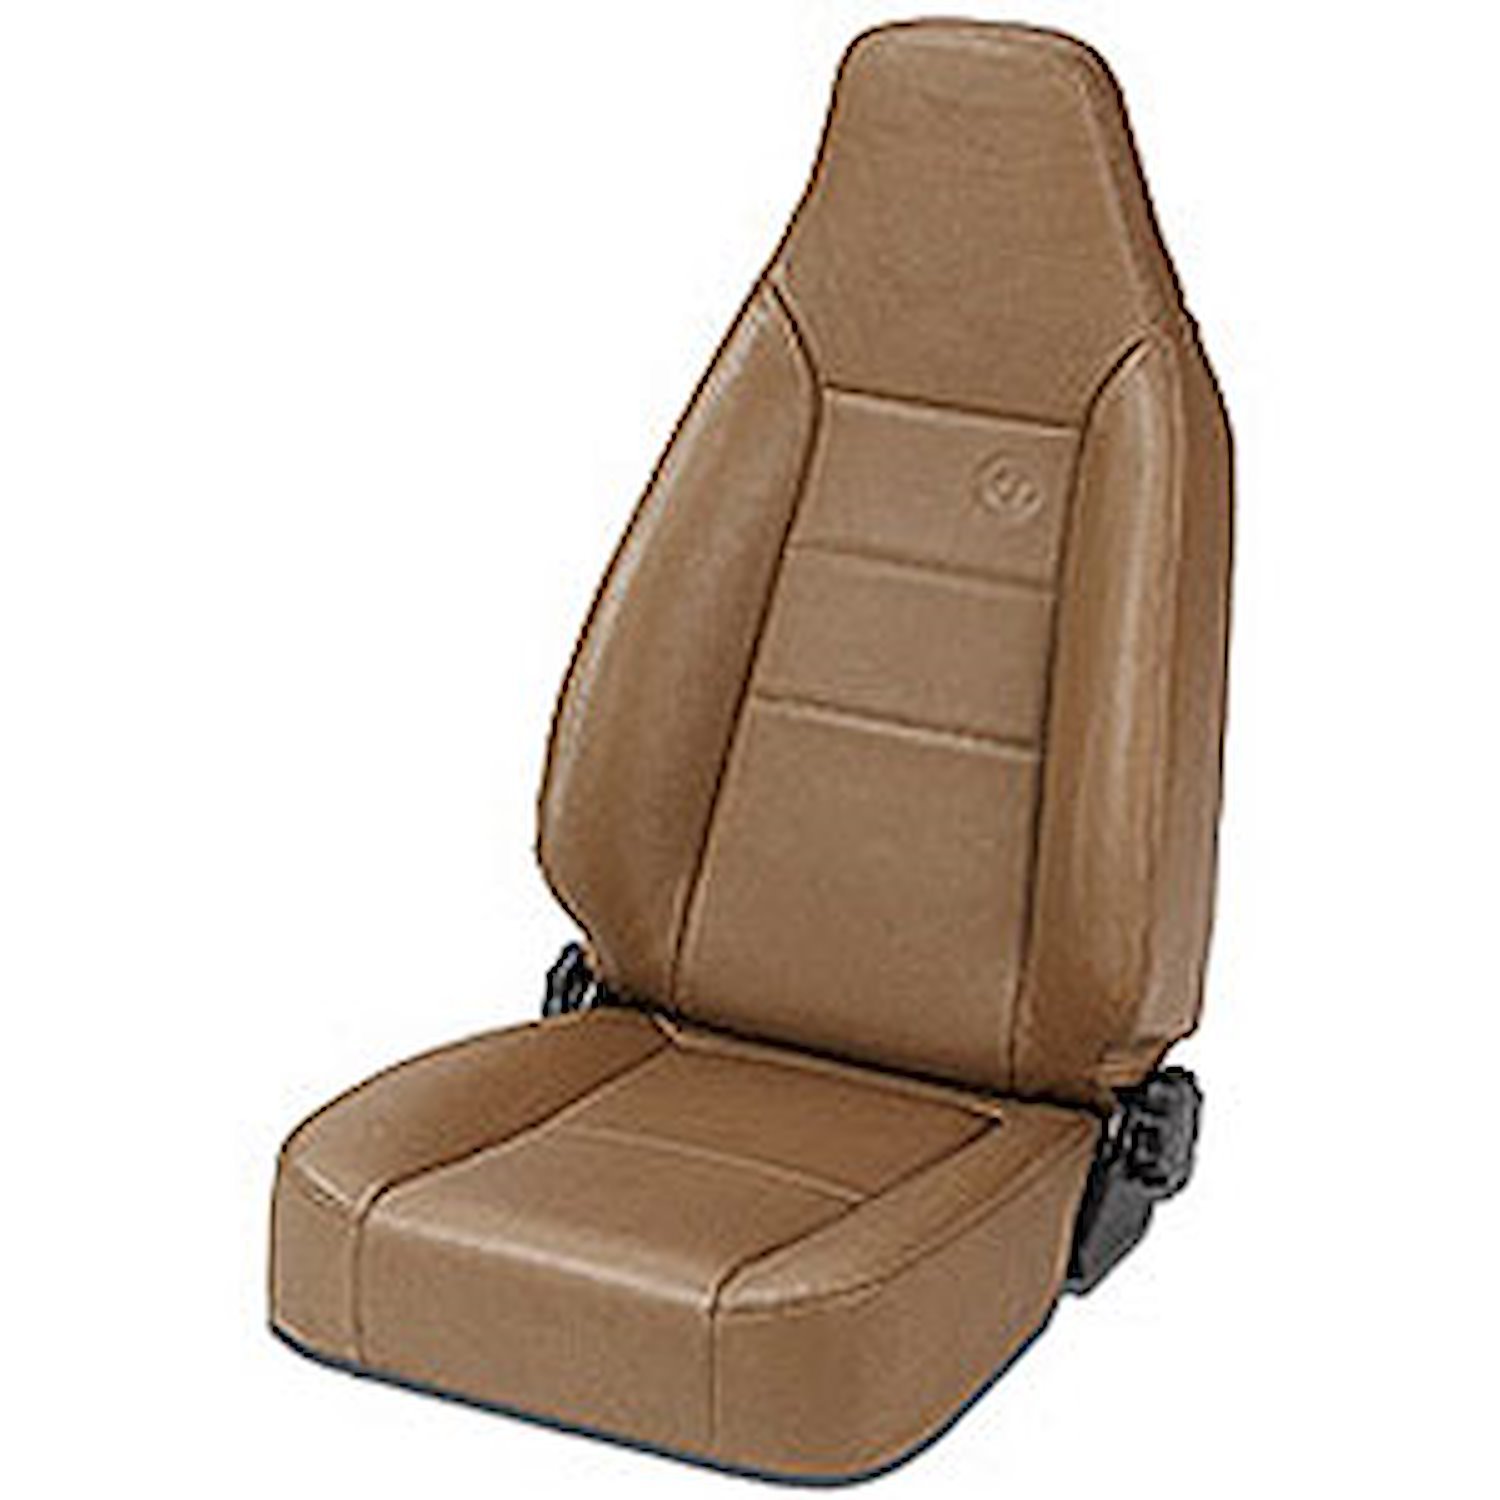 Trailmax II Sport Seat, Spice, Front, High-Back, Vinyl,